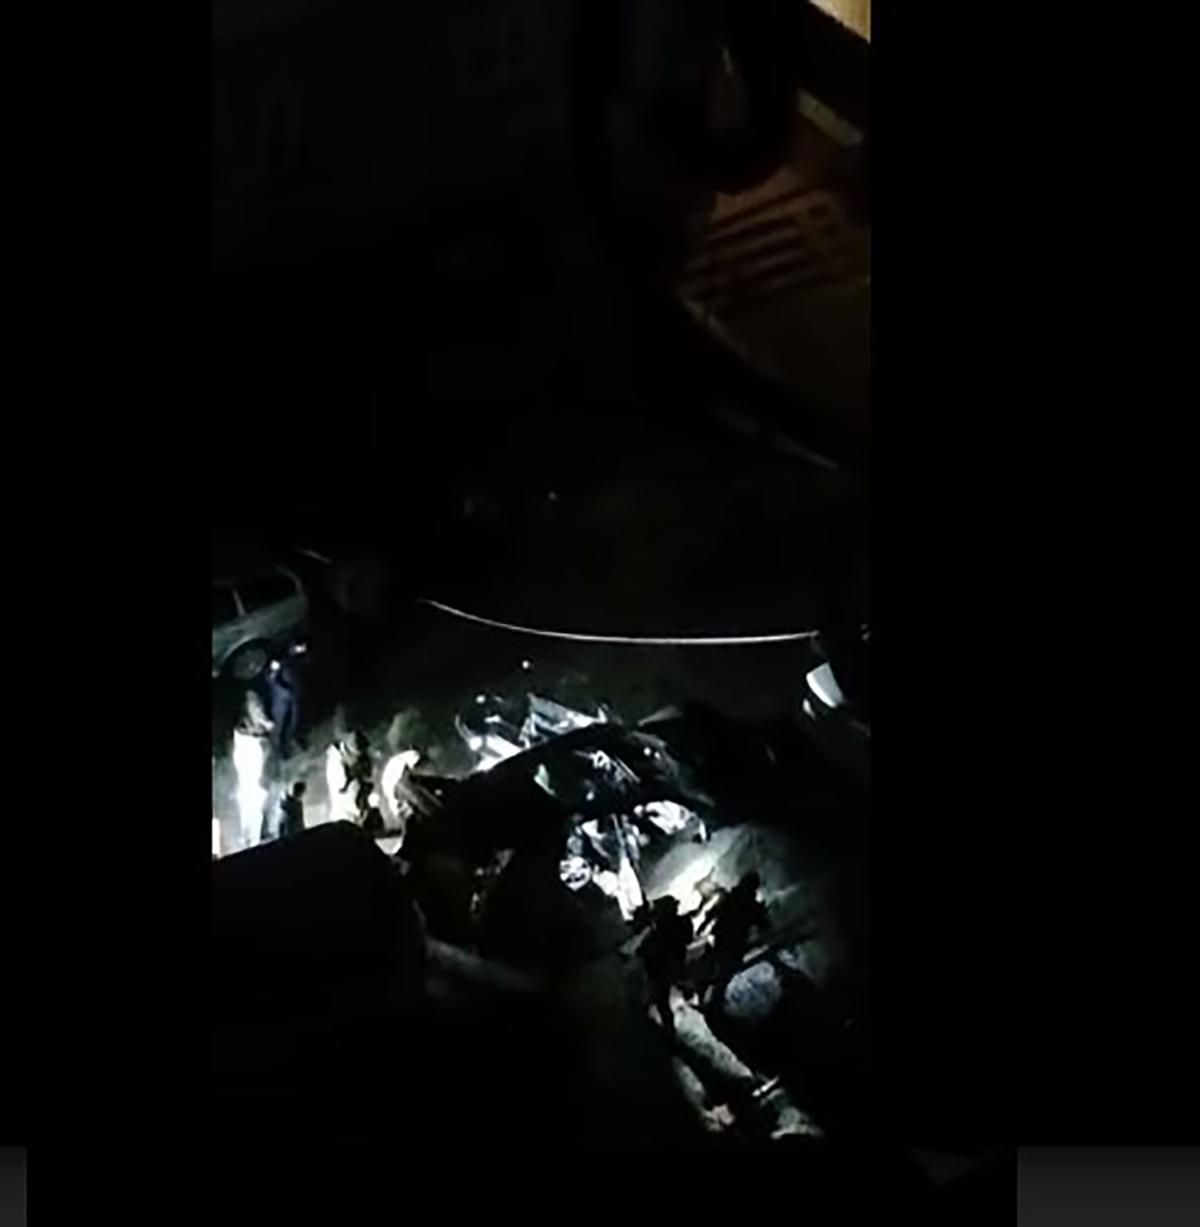 На Прикарпатье взорвали автомобиль: мужчина остался без руки